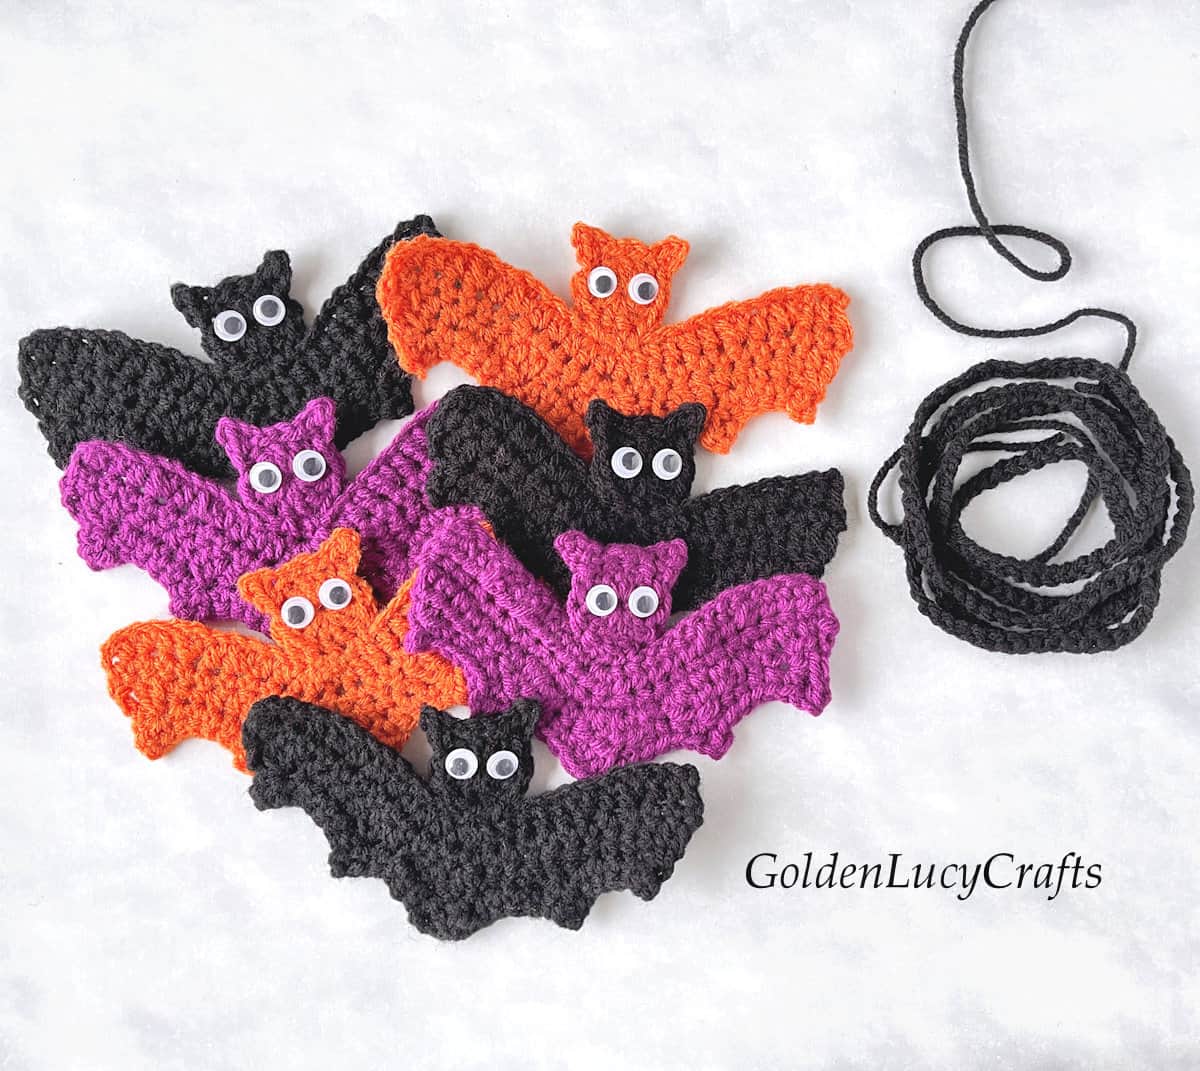 Crocheted bat appliques in black, purple and orange colors.